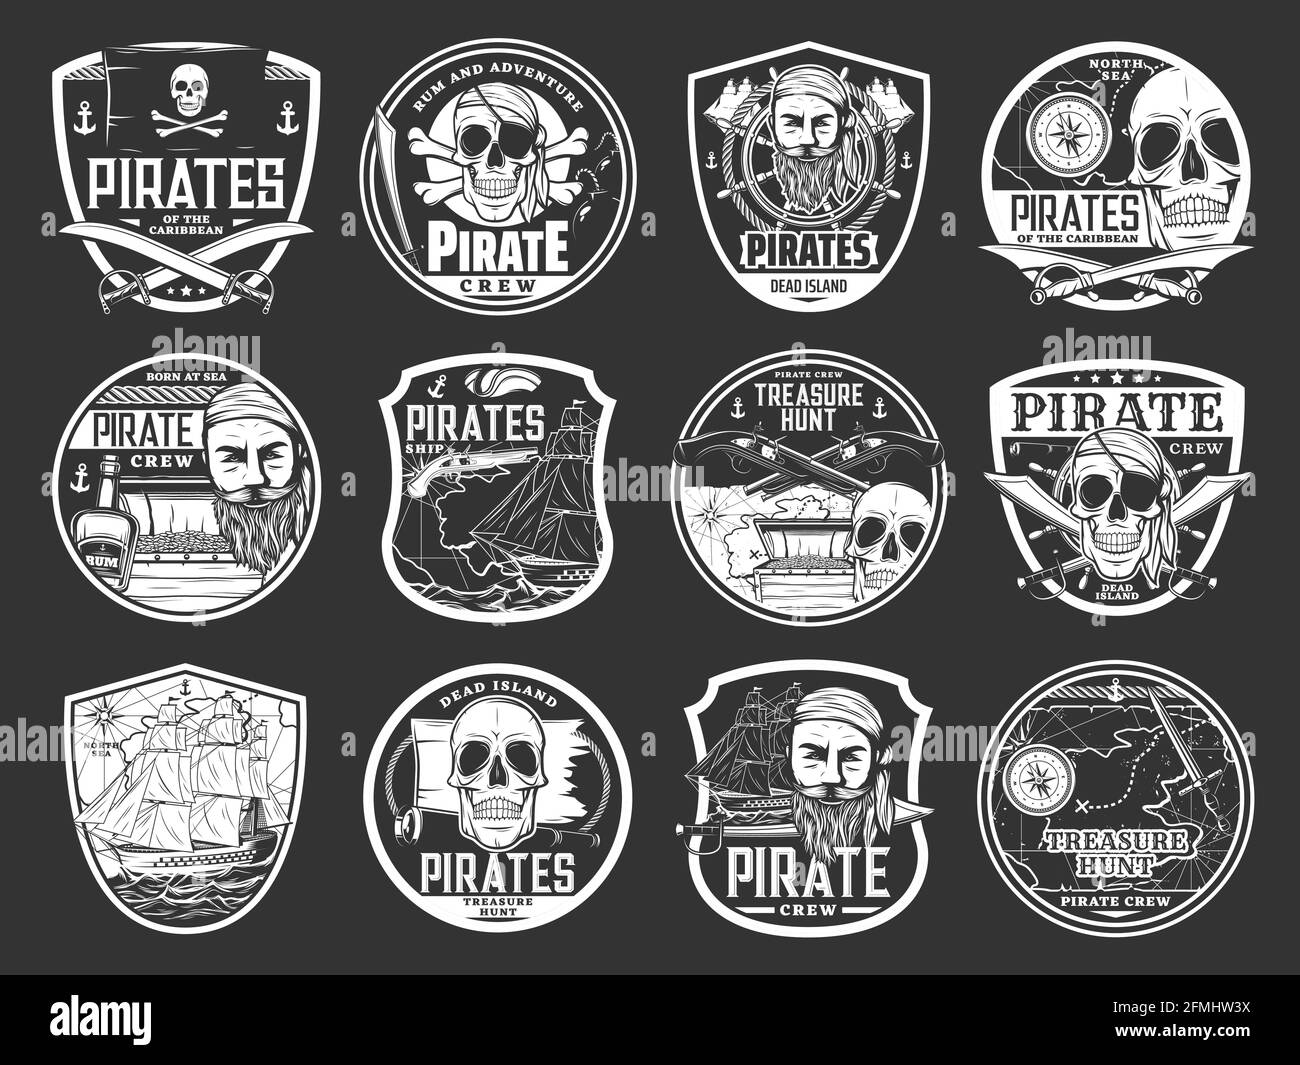 pirate crew logo